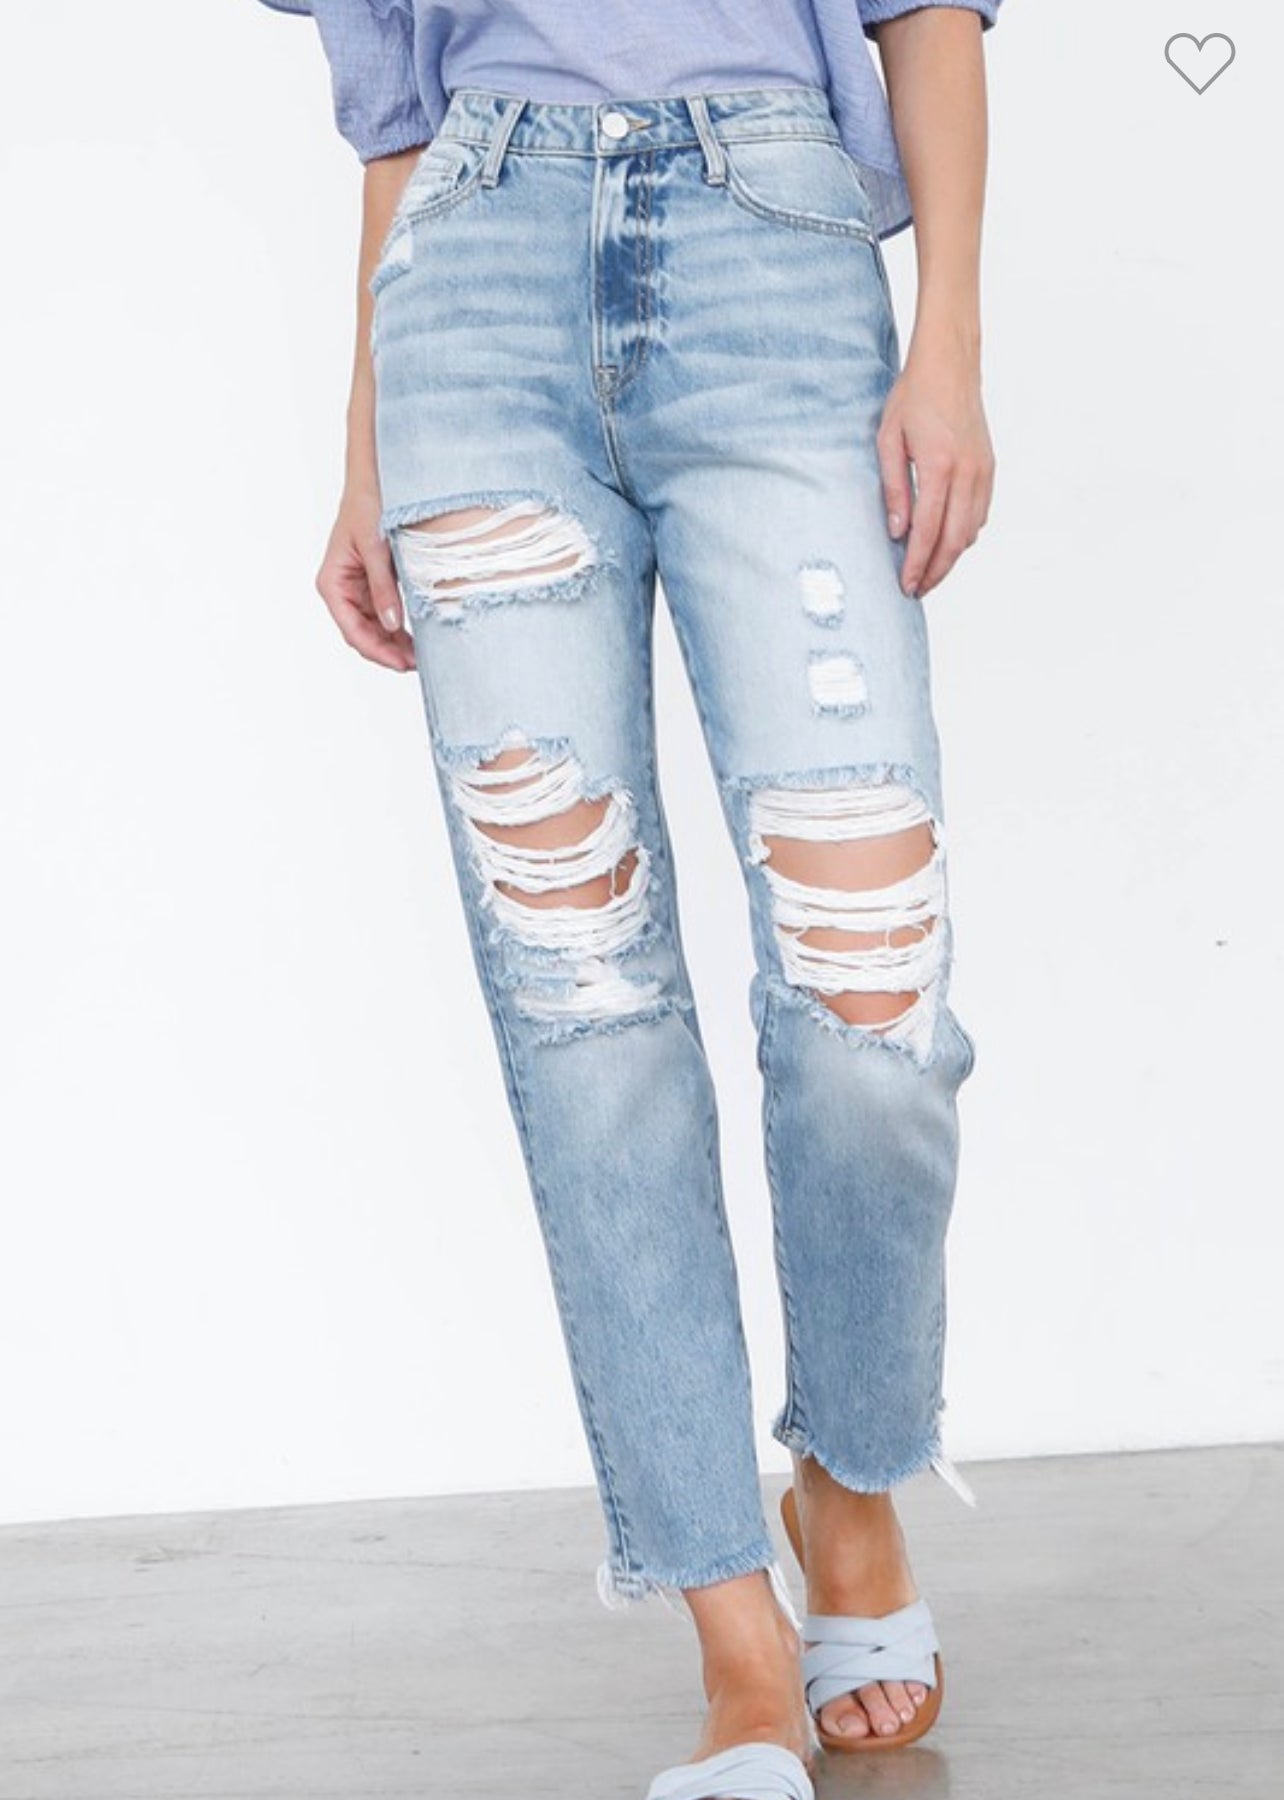 Breckinridge Jeans